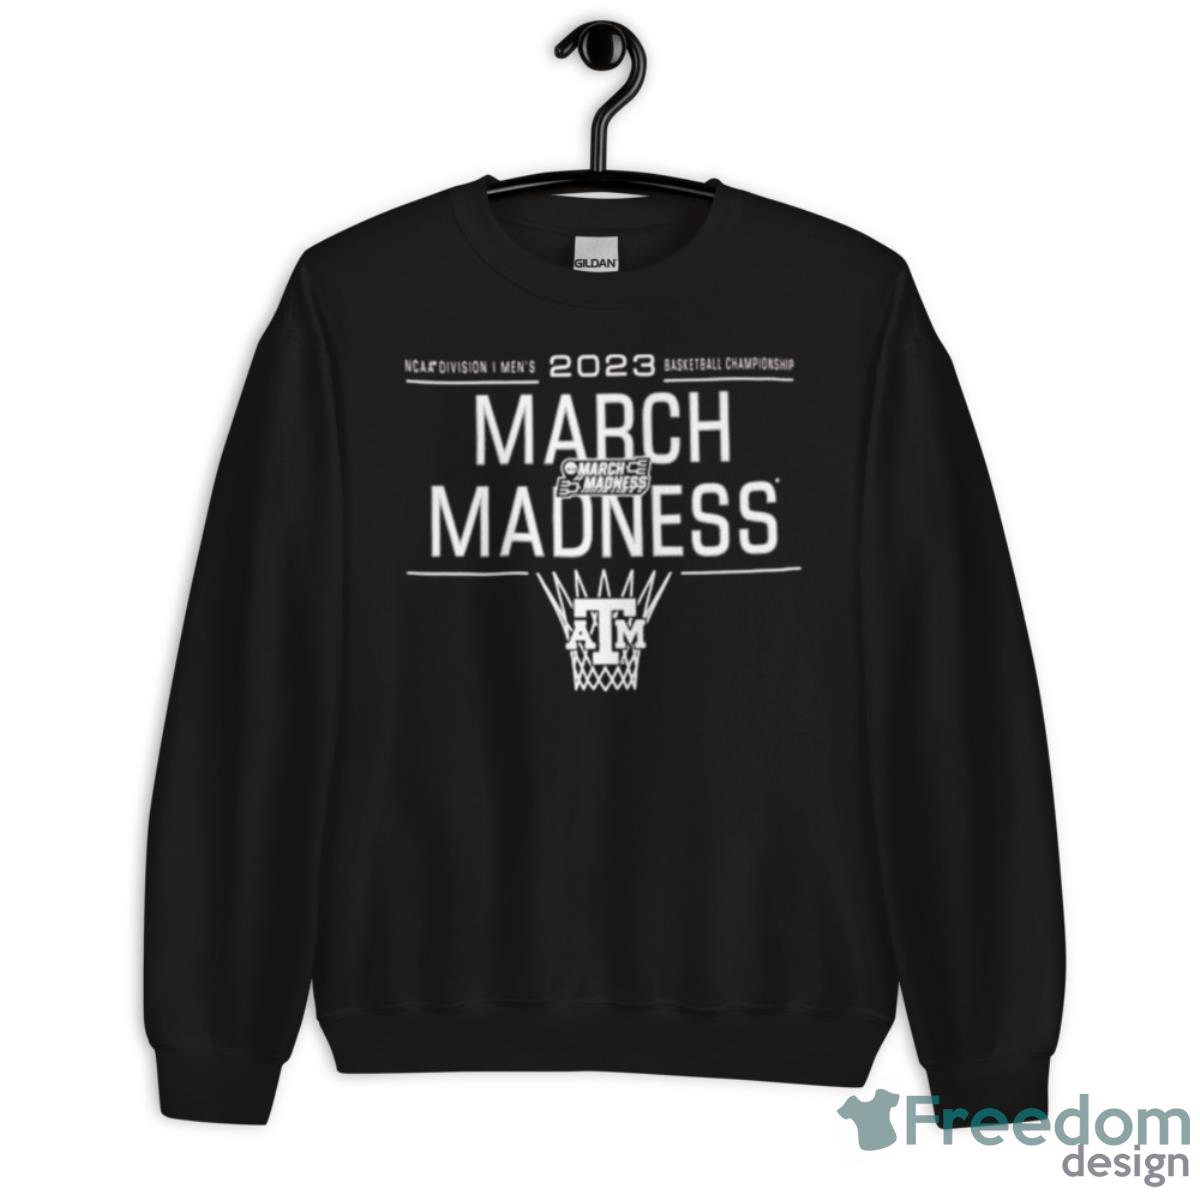 Texas A&M Aggies 2023 NCAA division I Men’s Basketball championship March Madness shirt